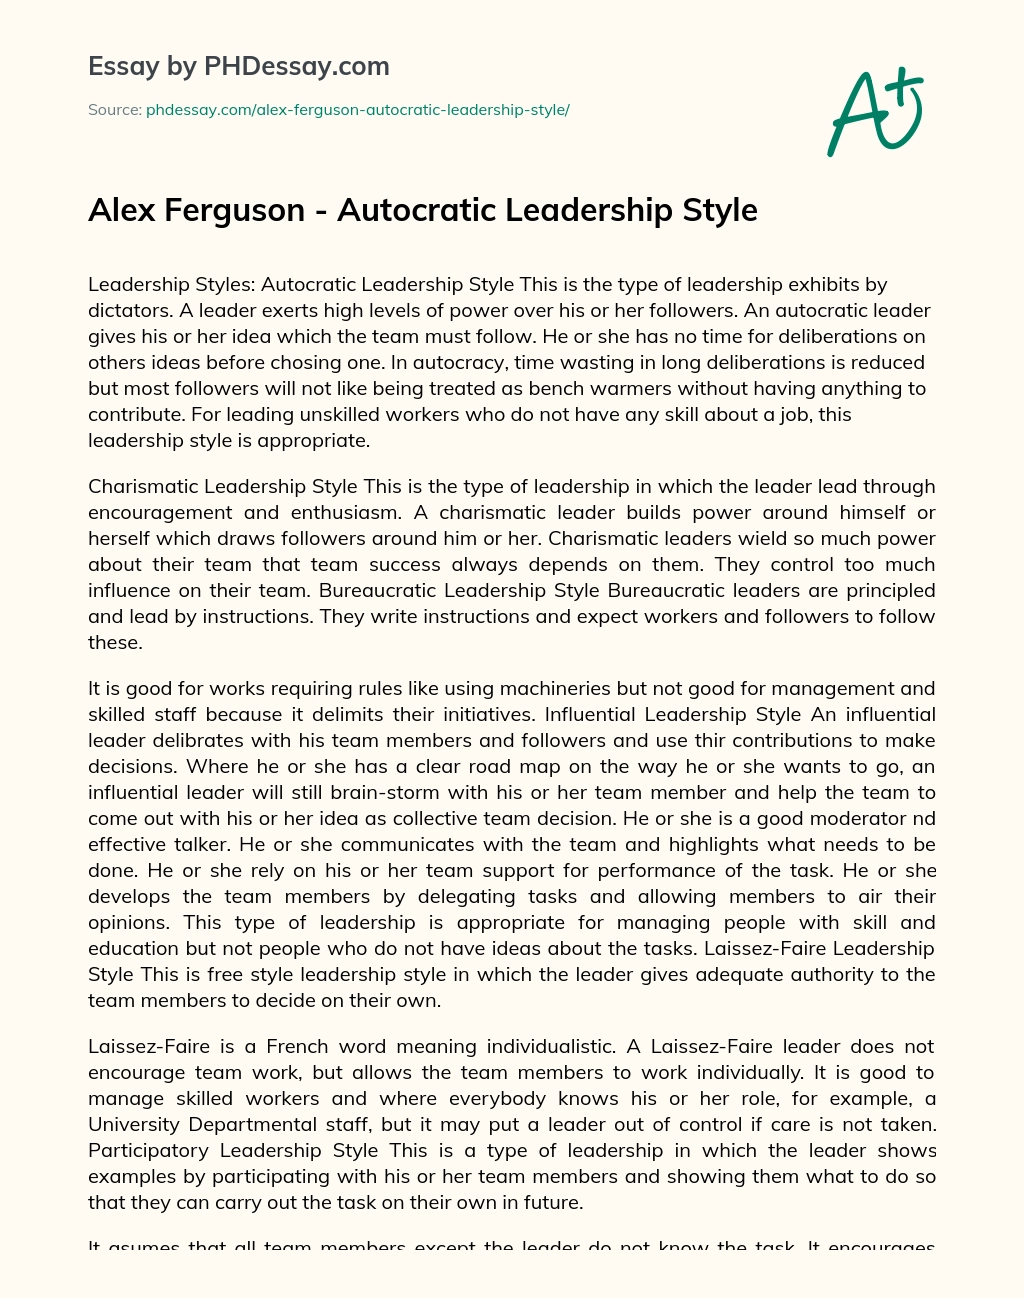 Alex Ferguson – Autocratic Leadership Style essay